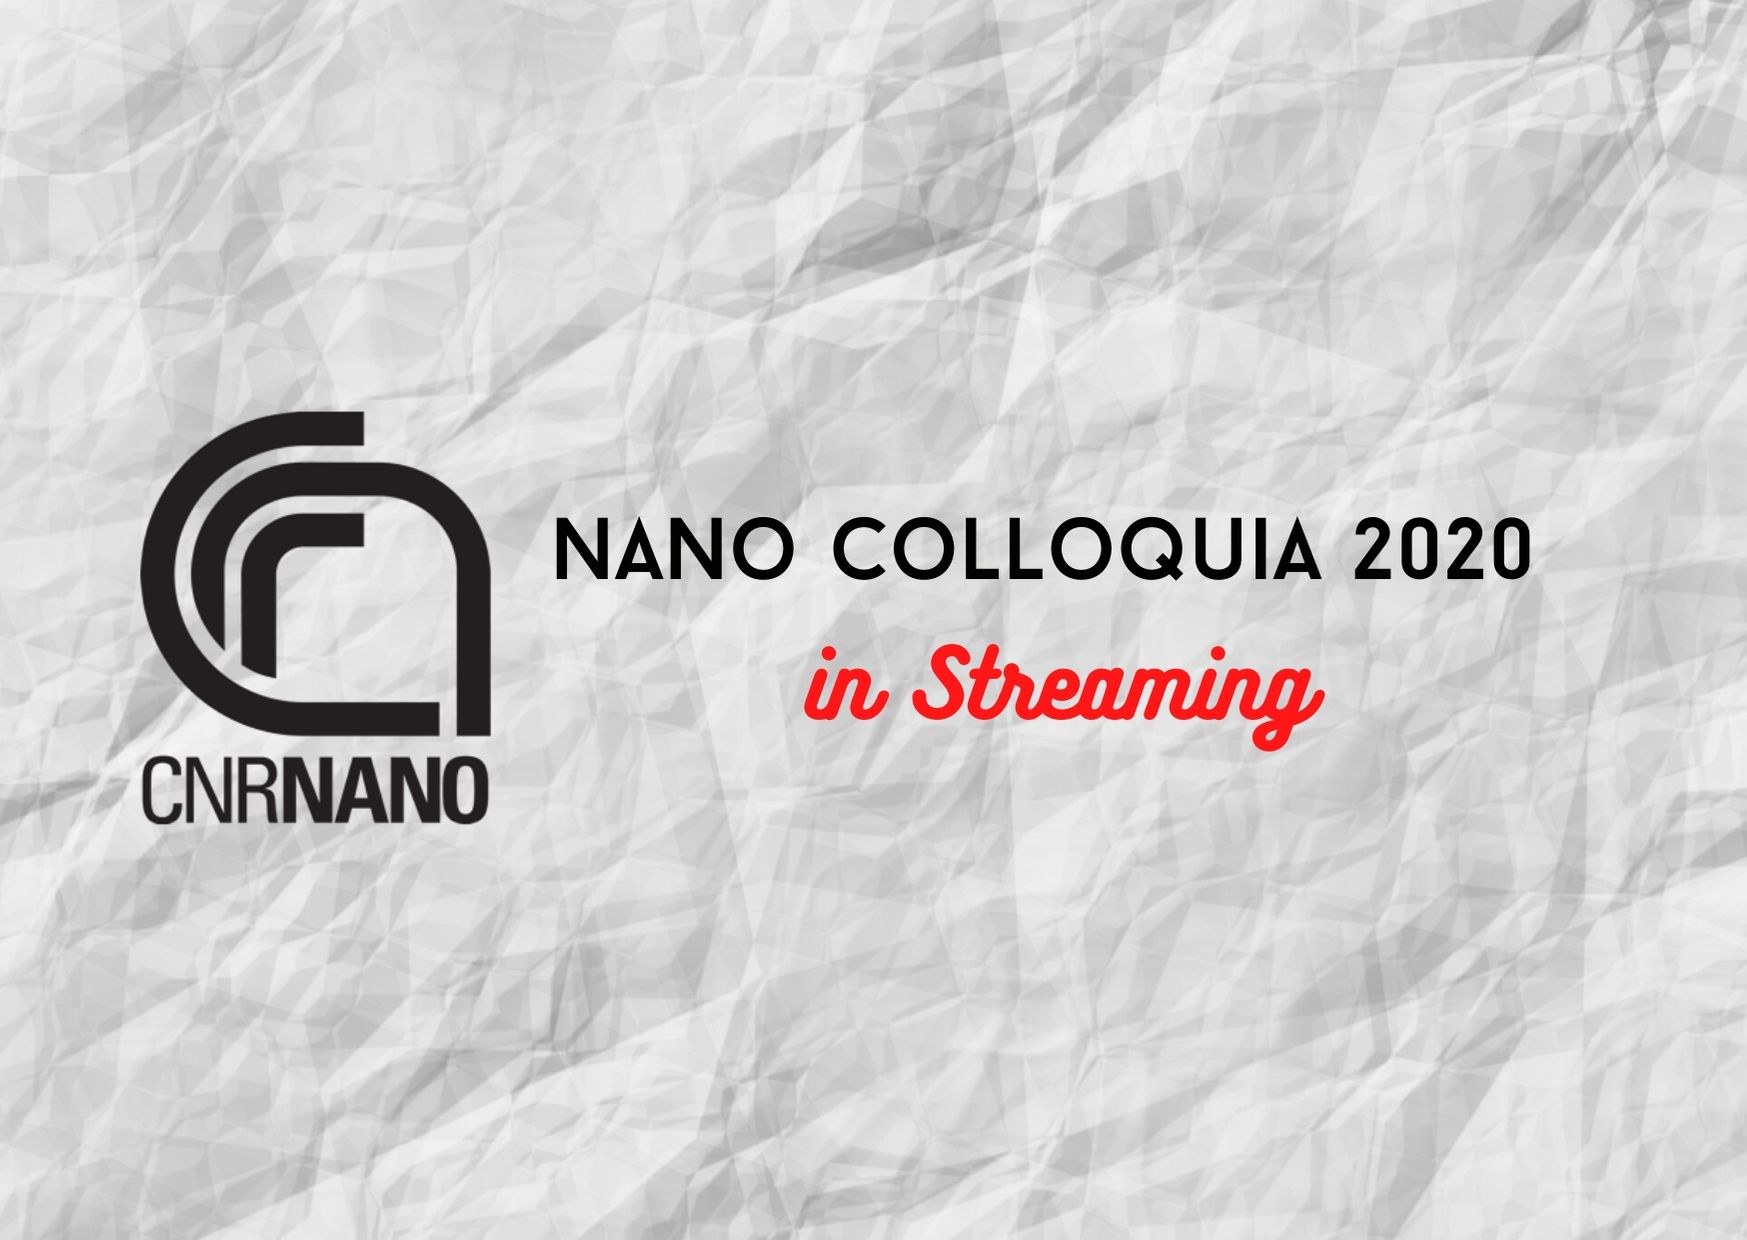 NANO Colloquia 2020 in streaming